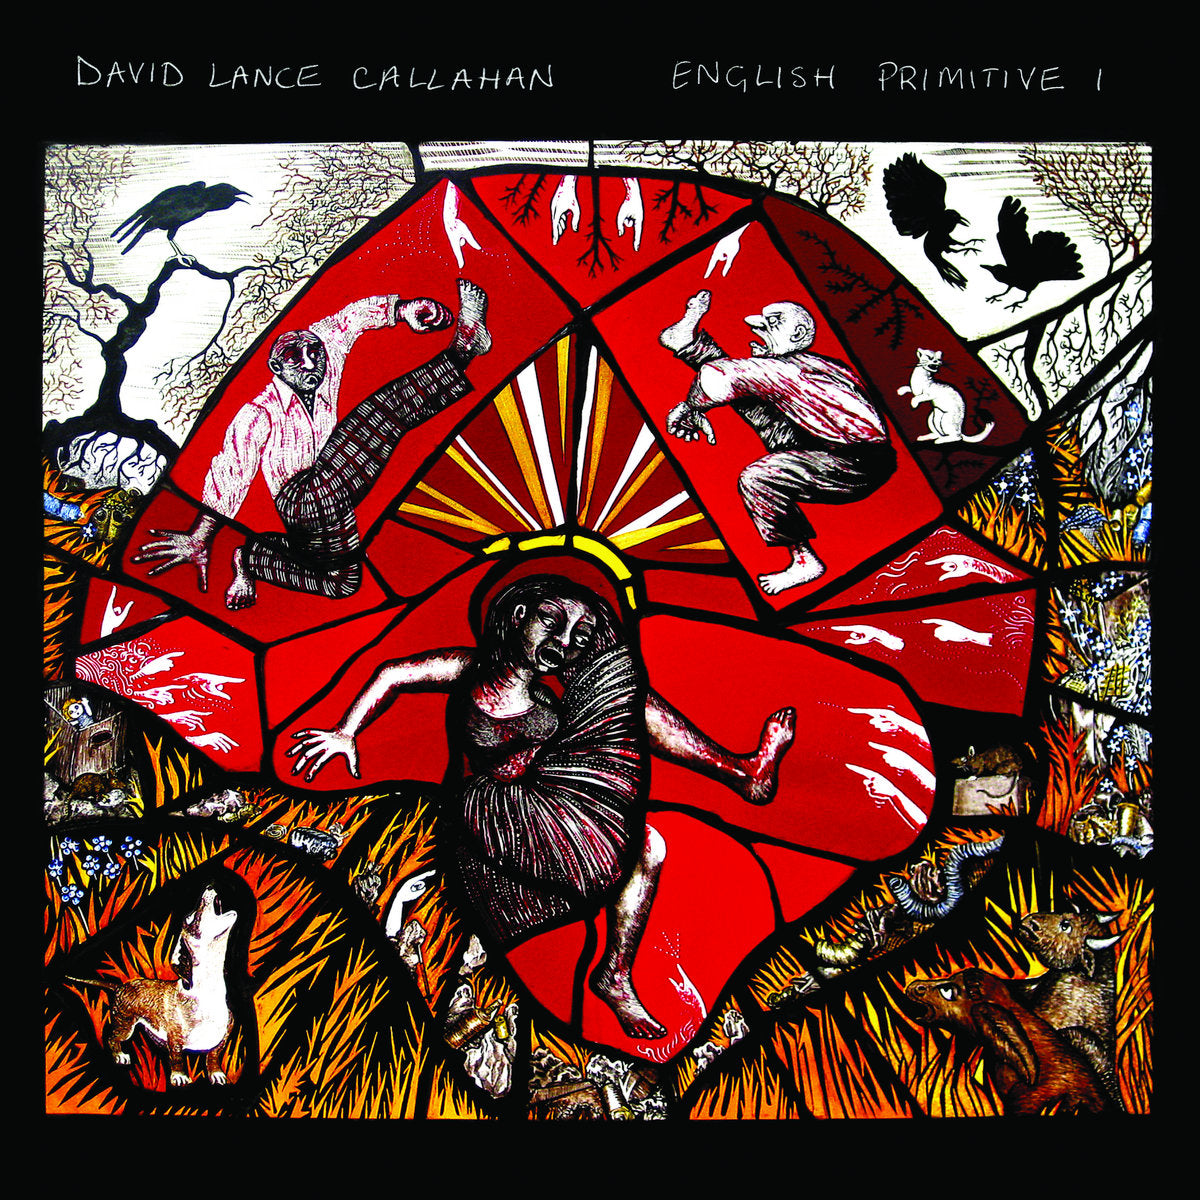 DAVID LANCE CALLAHAN - English Primitive I - LP - Vinyl